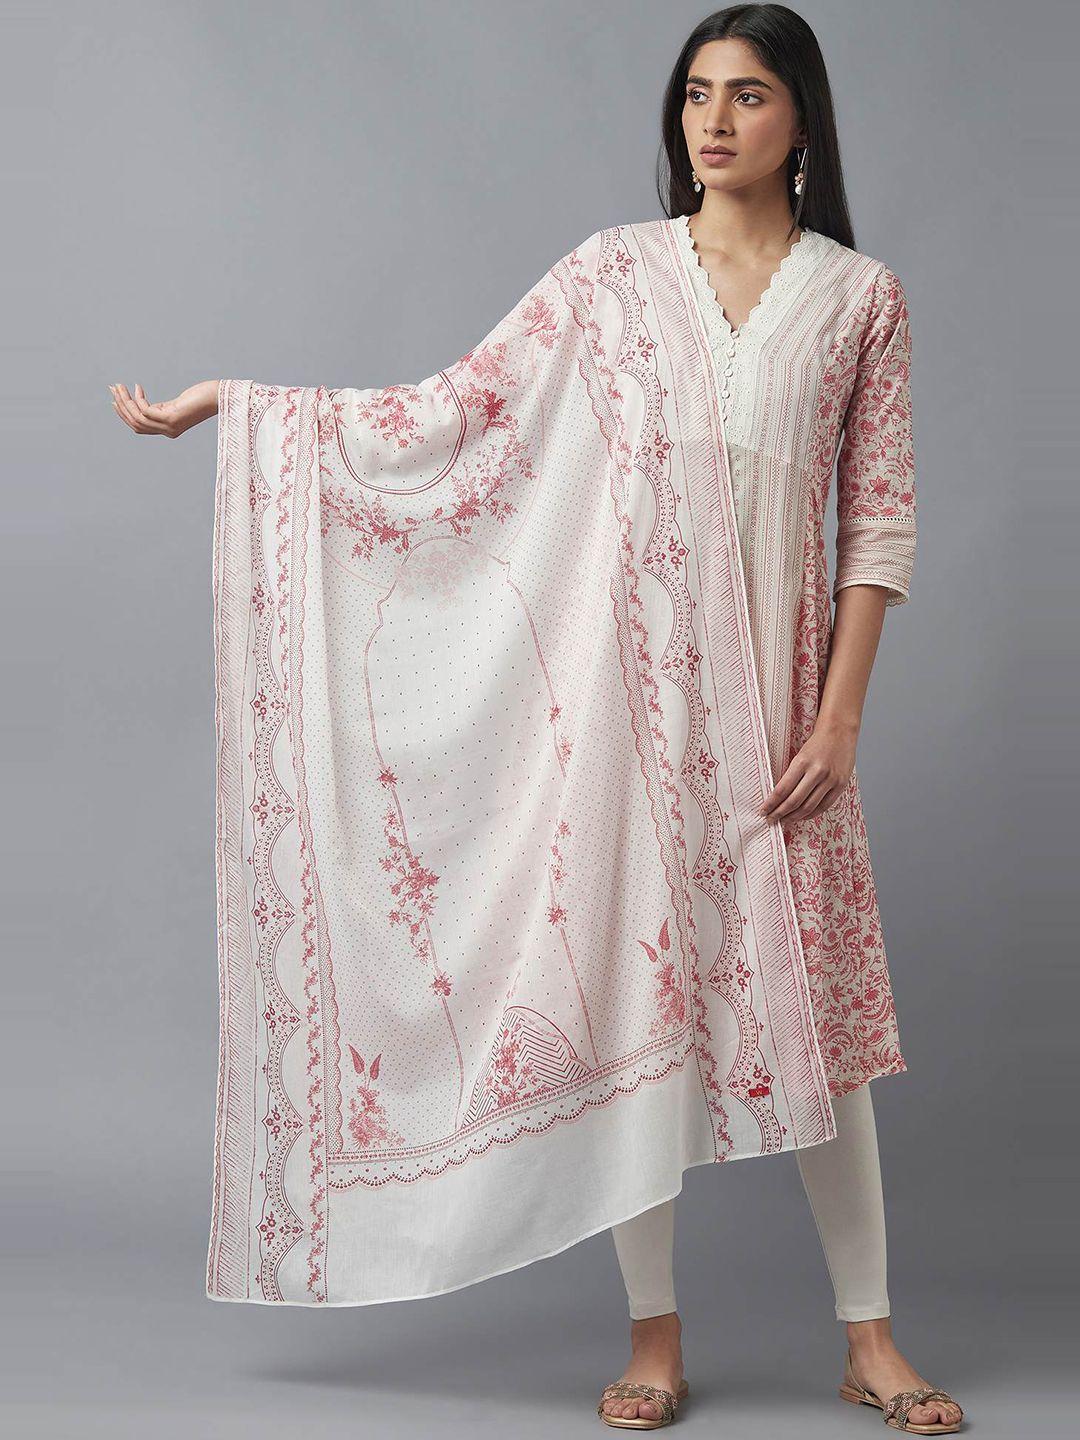 w-women-white-&-pink-printed-pure-cotton-dupatta